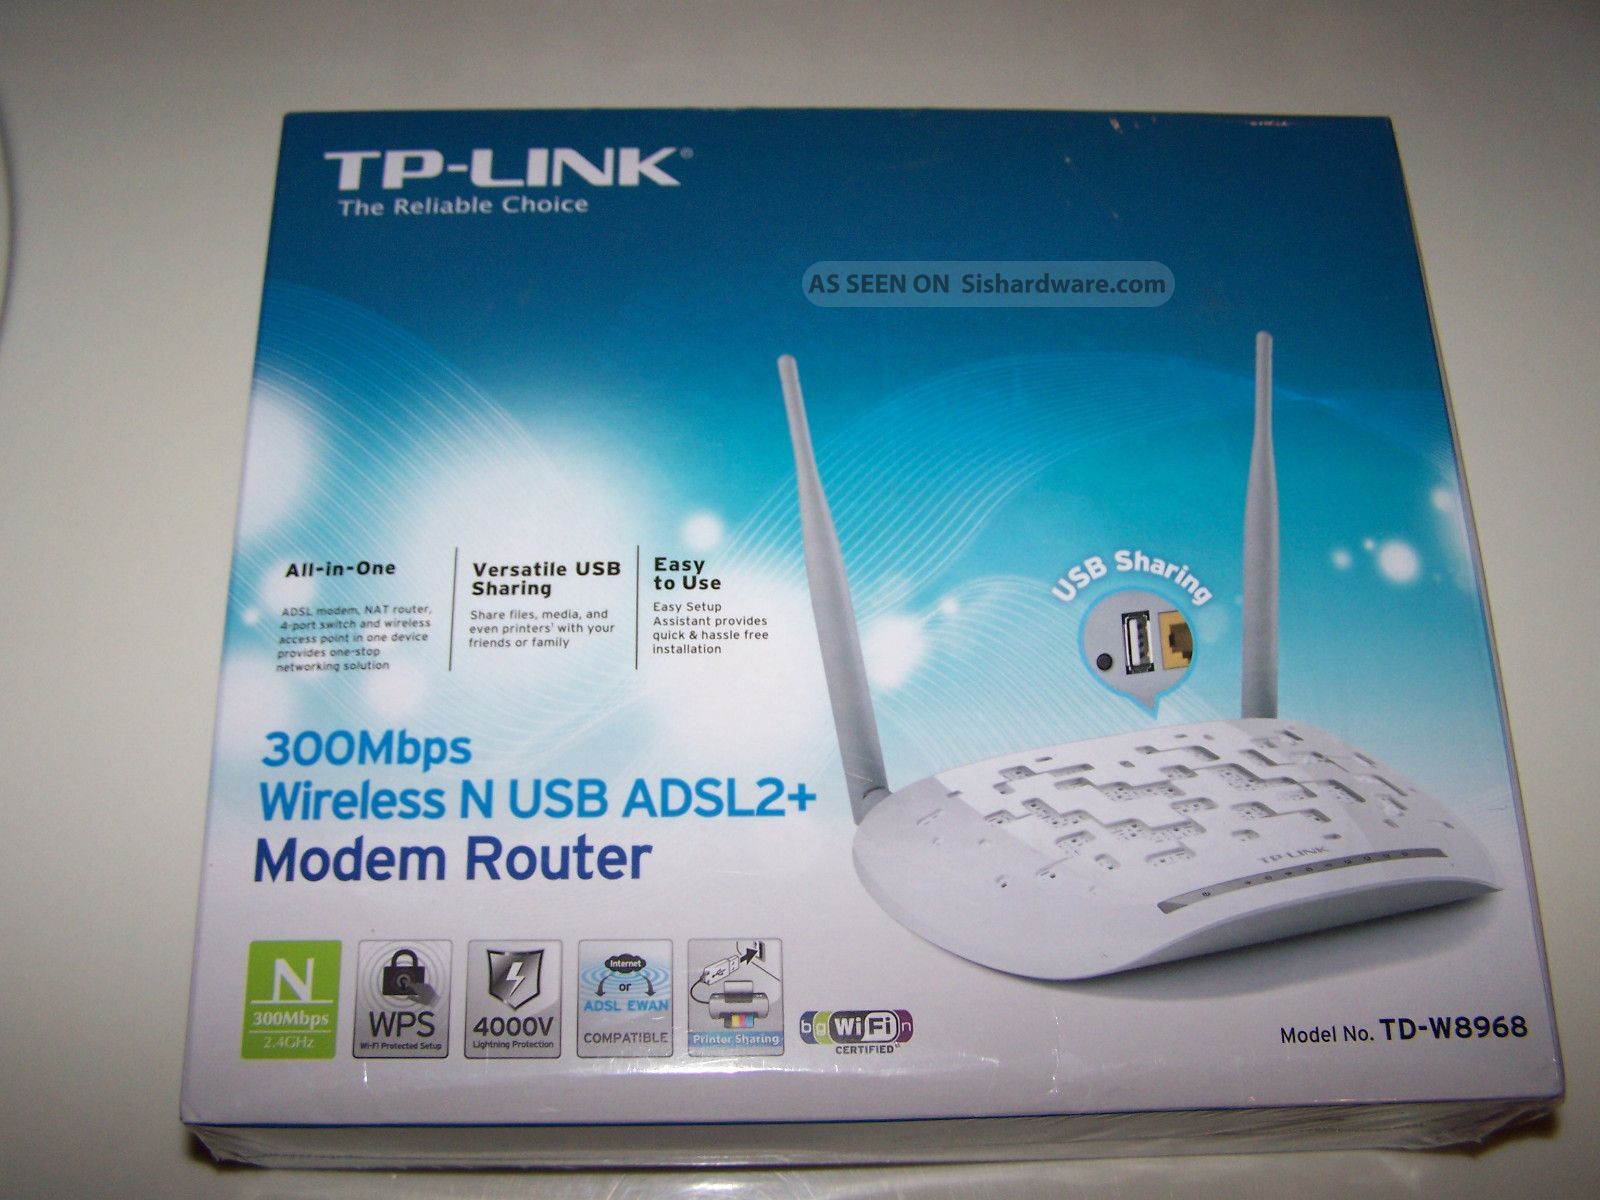 TP-Link 300Mbps Wireless N USB ADSL2+ Modem Router TD-W8968